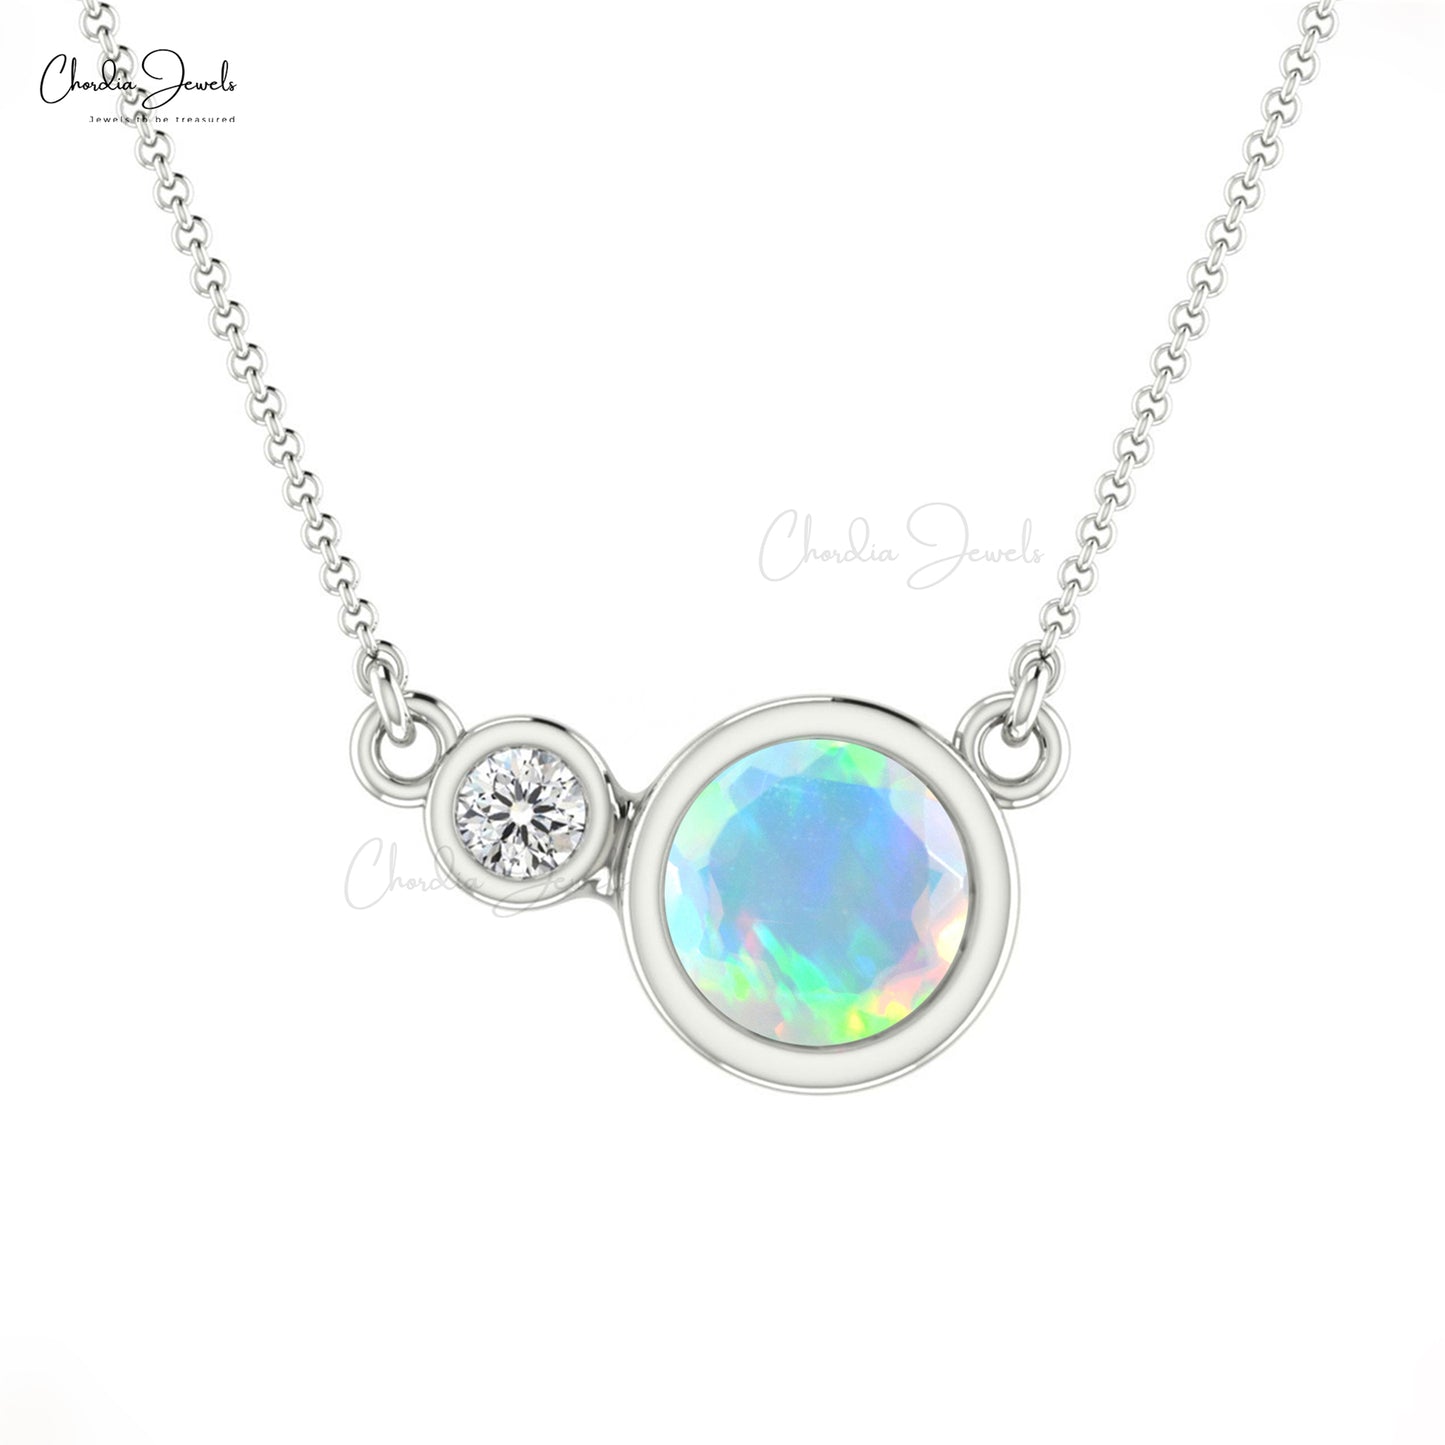 Amali Ethopian Opal Necklace 235-882 - Hurdle's Jewelry